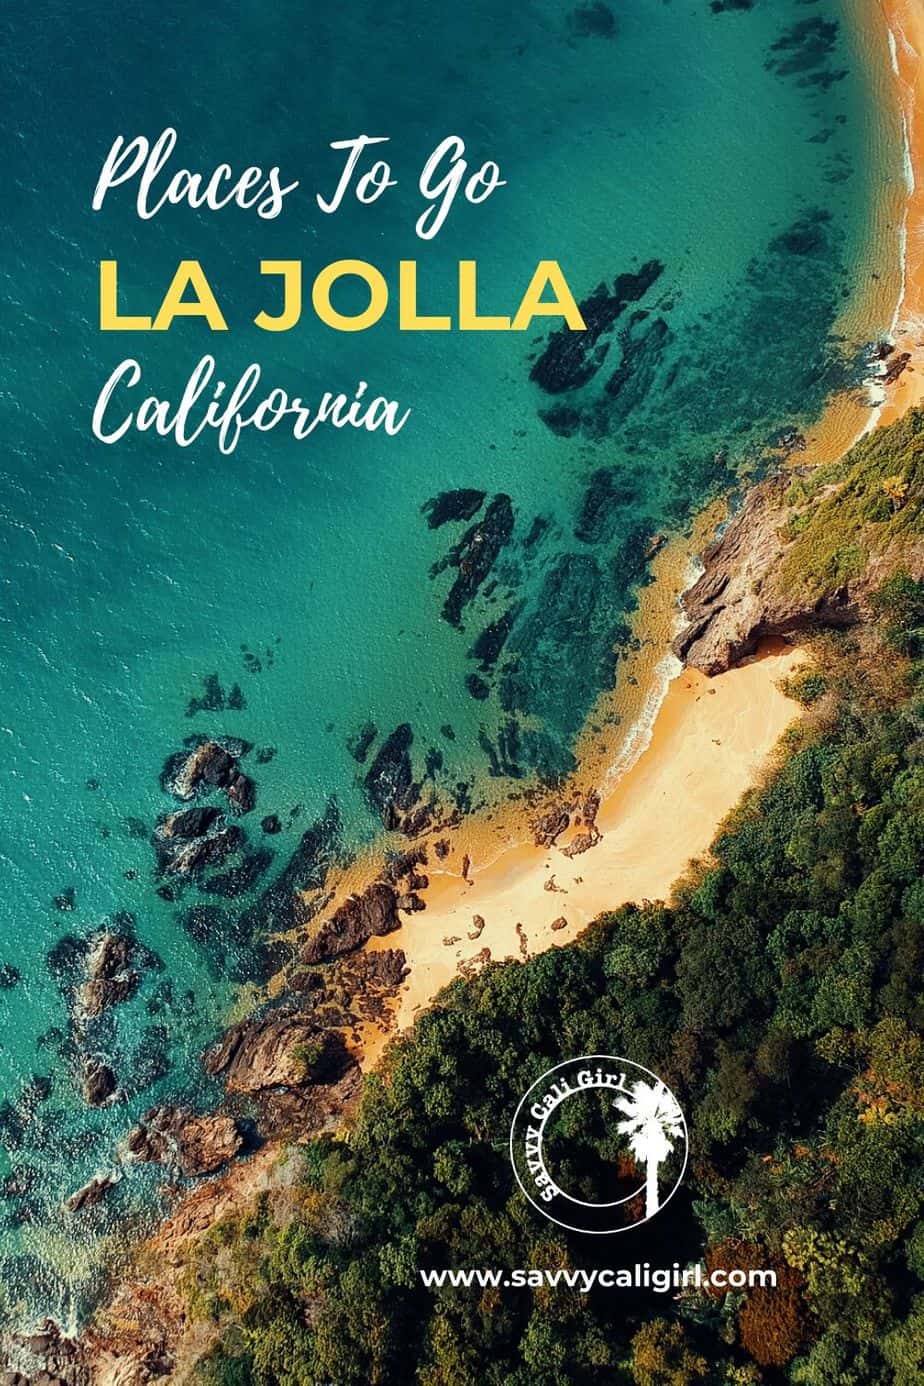 La Jolla Beaches in San Diego, California